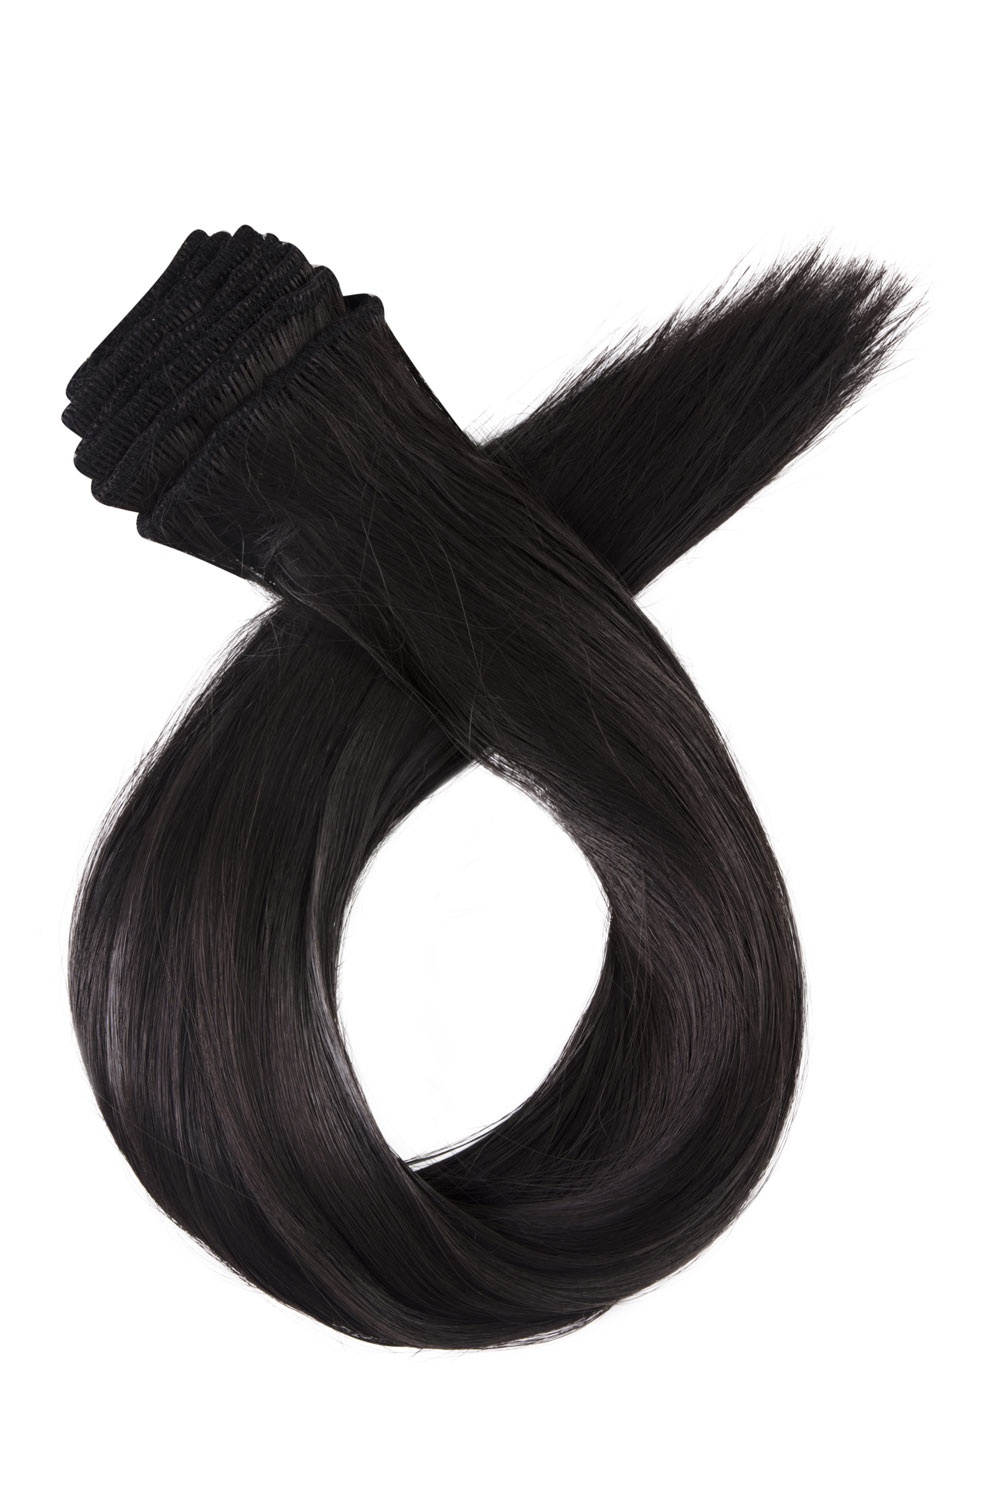 Stredne hnedé clip in vlasy, 50cm, 150g, farba 4